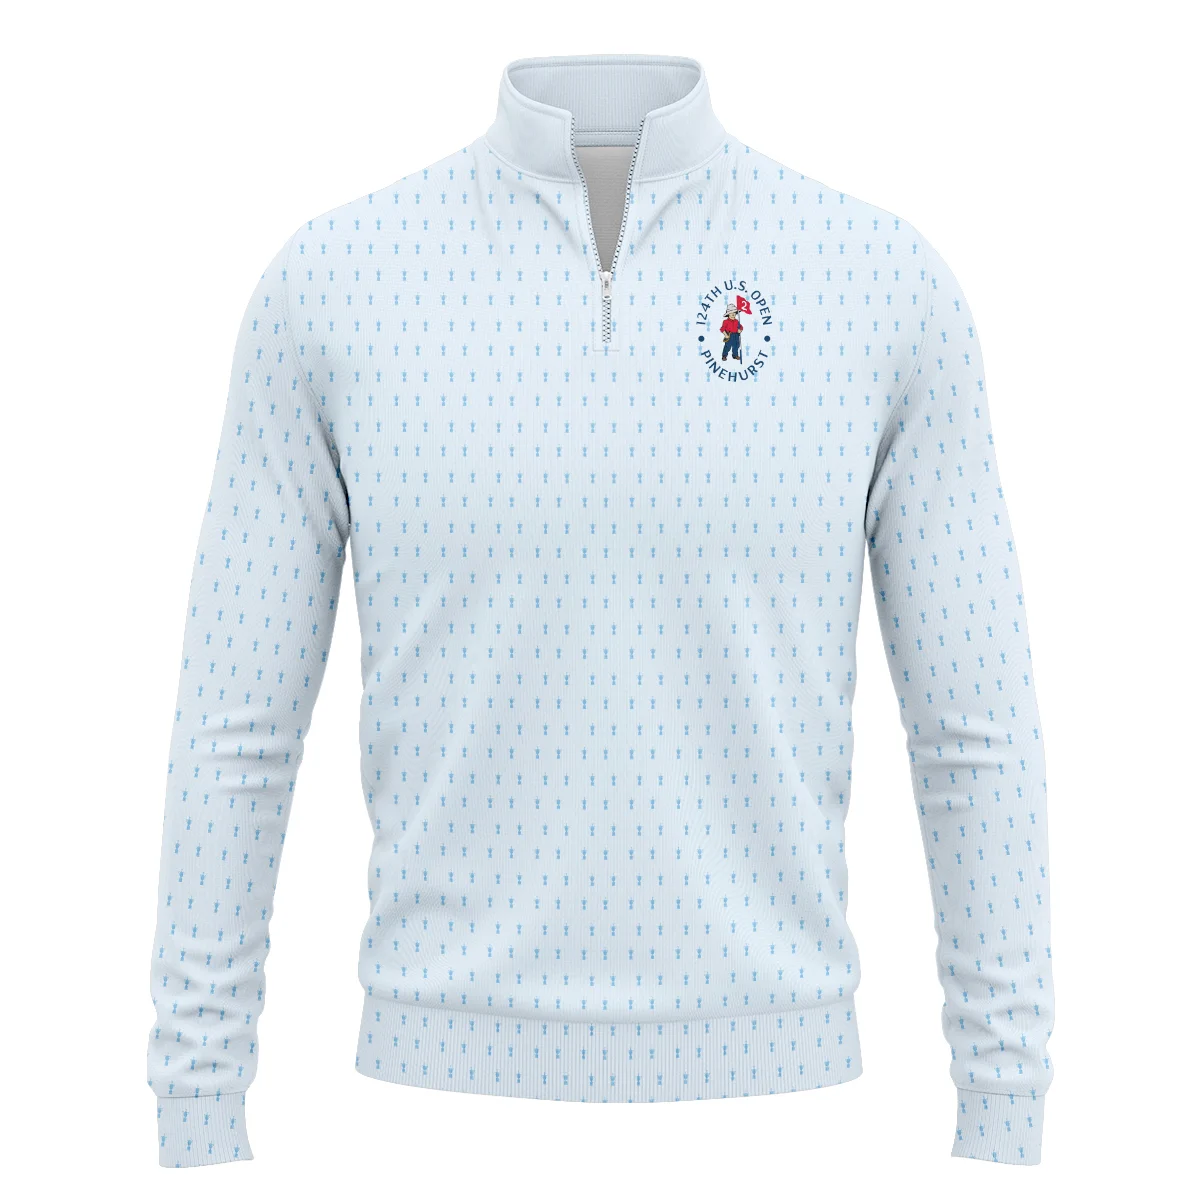 Golf Pattern Cup Light Blue Green 124th U.S. Open Pinehurst Unisex Sweatshirt Style Classic Sweatshirt